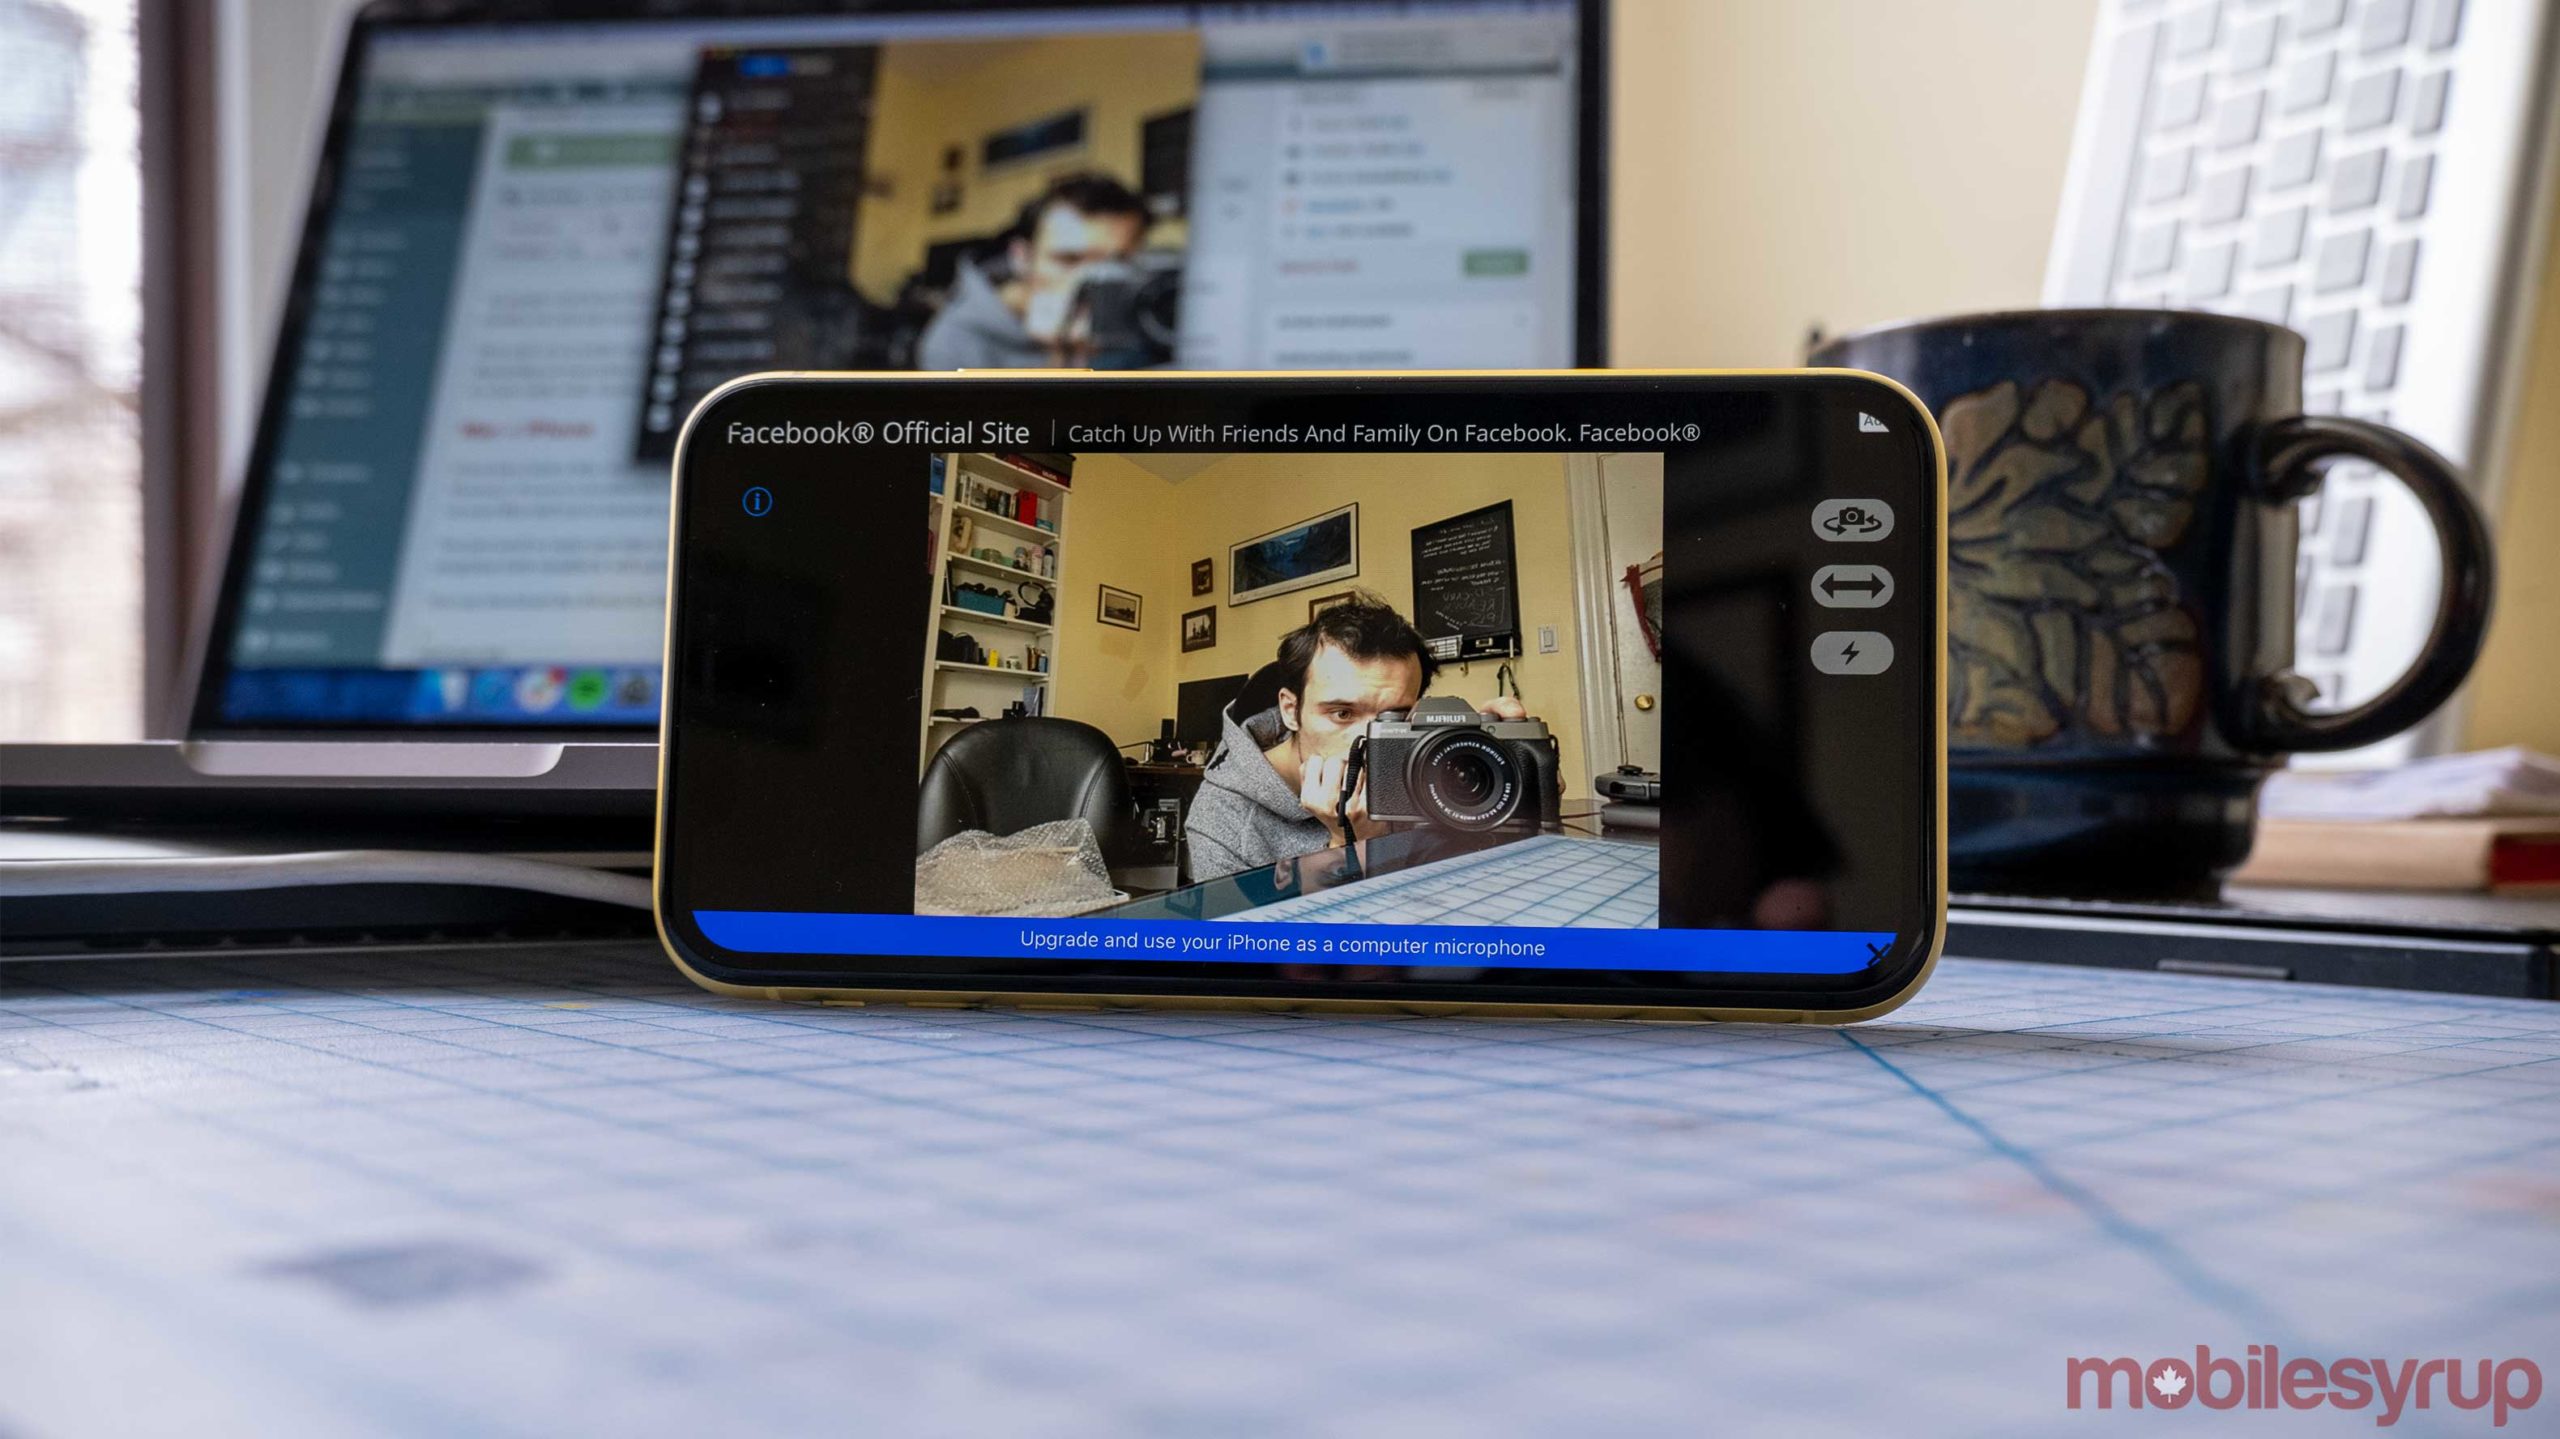 mac android studio emulator get laptop camera